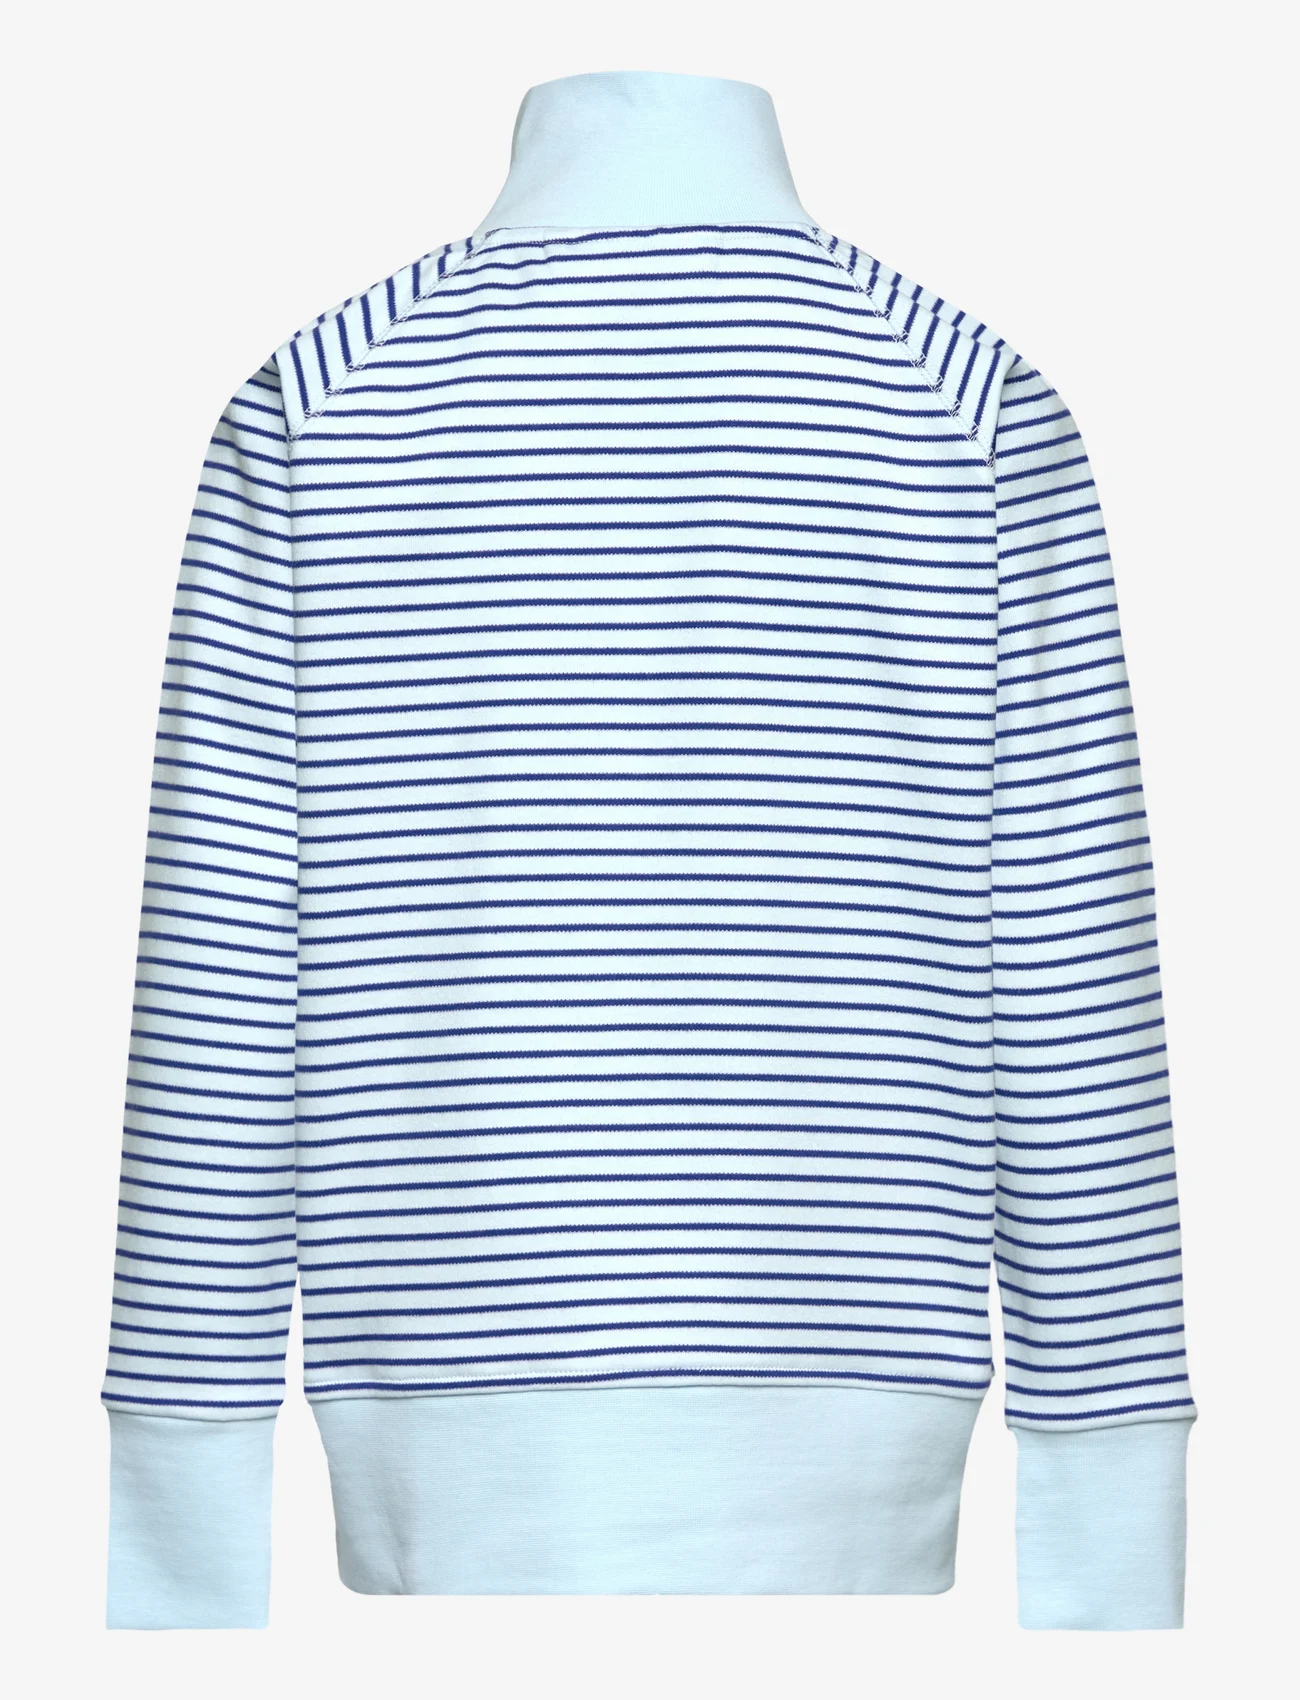 Geggamoja - Zip Sweater - sweatshirts & hættetrøjer - blue - 1